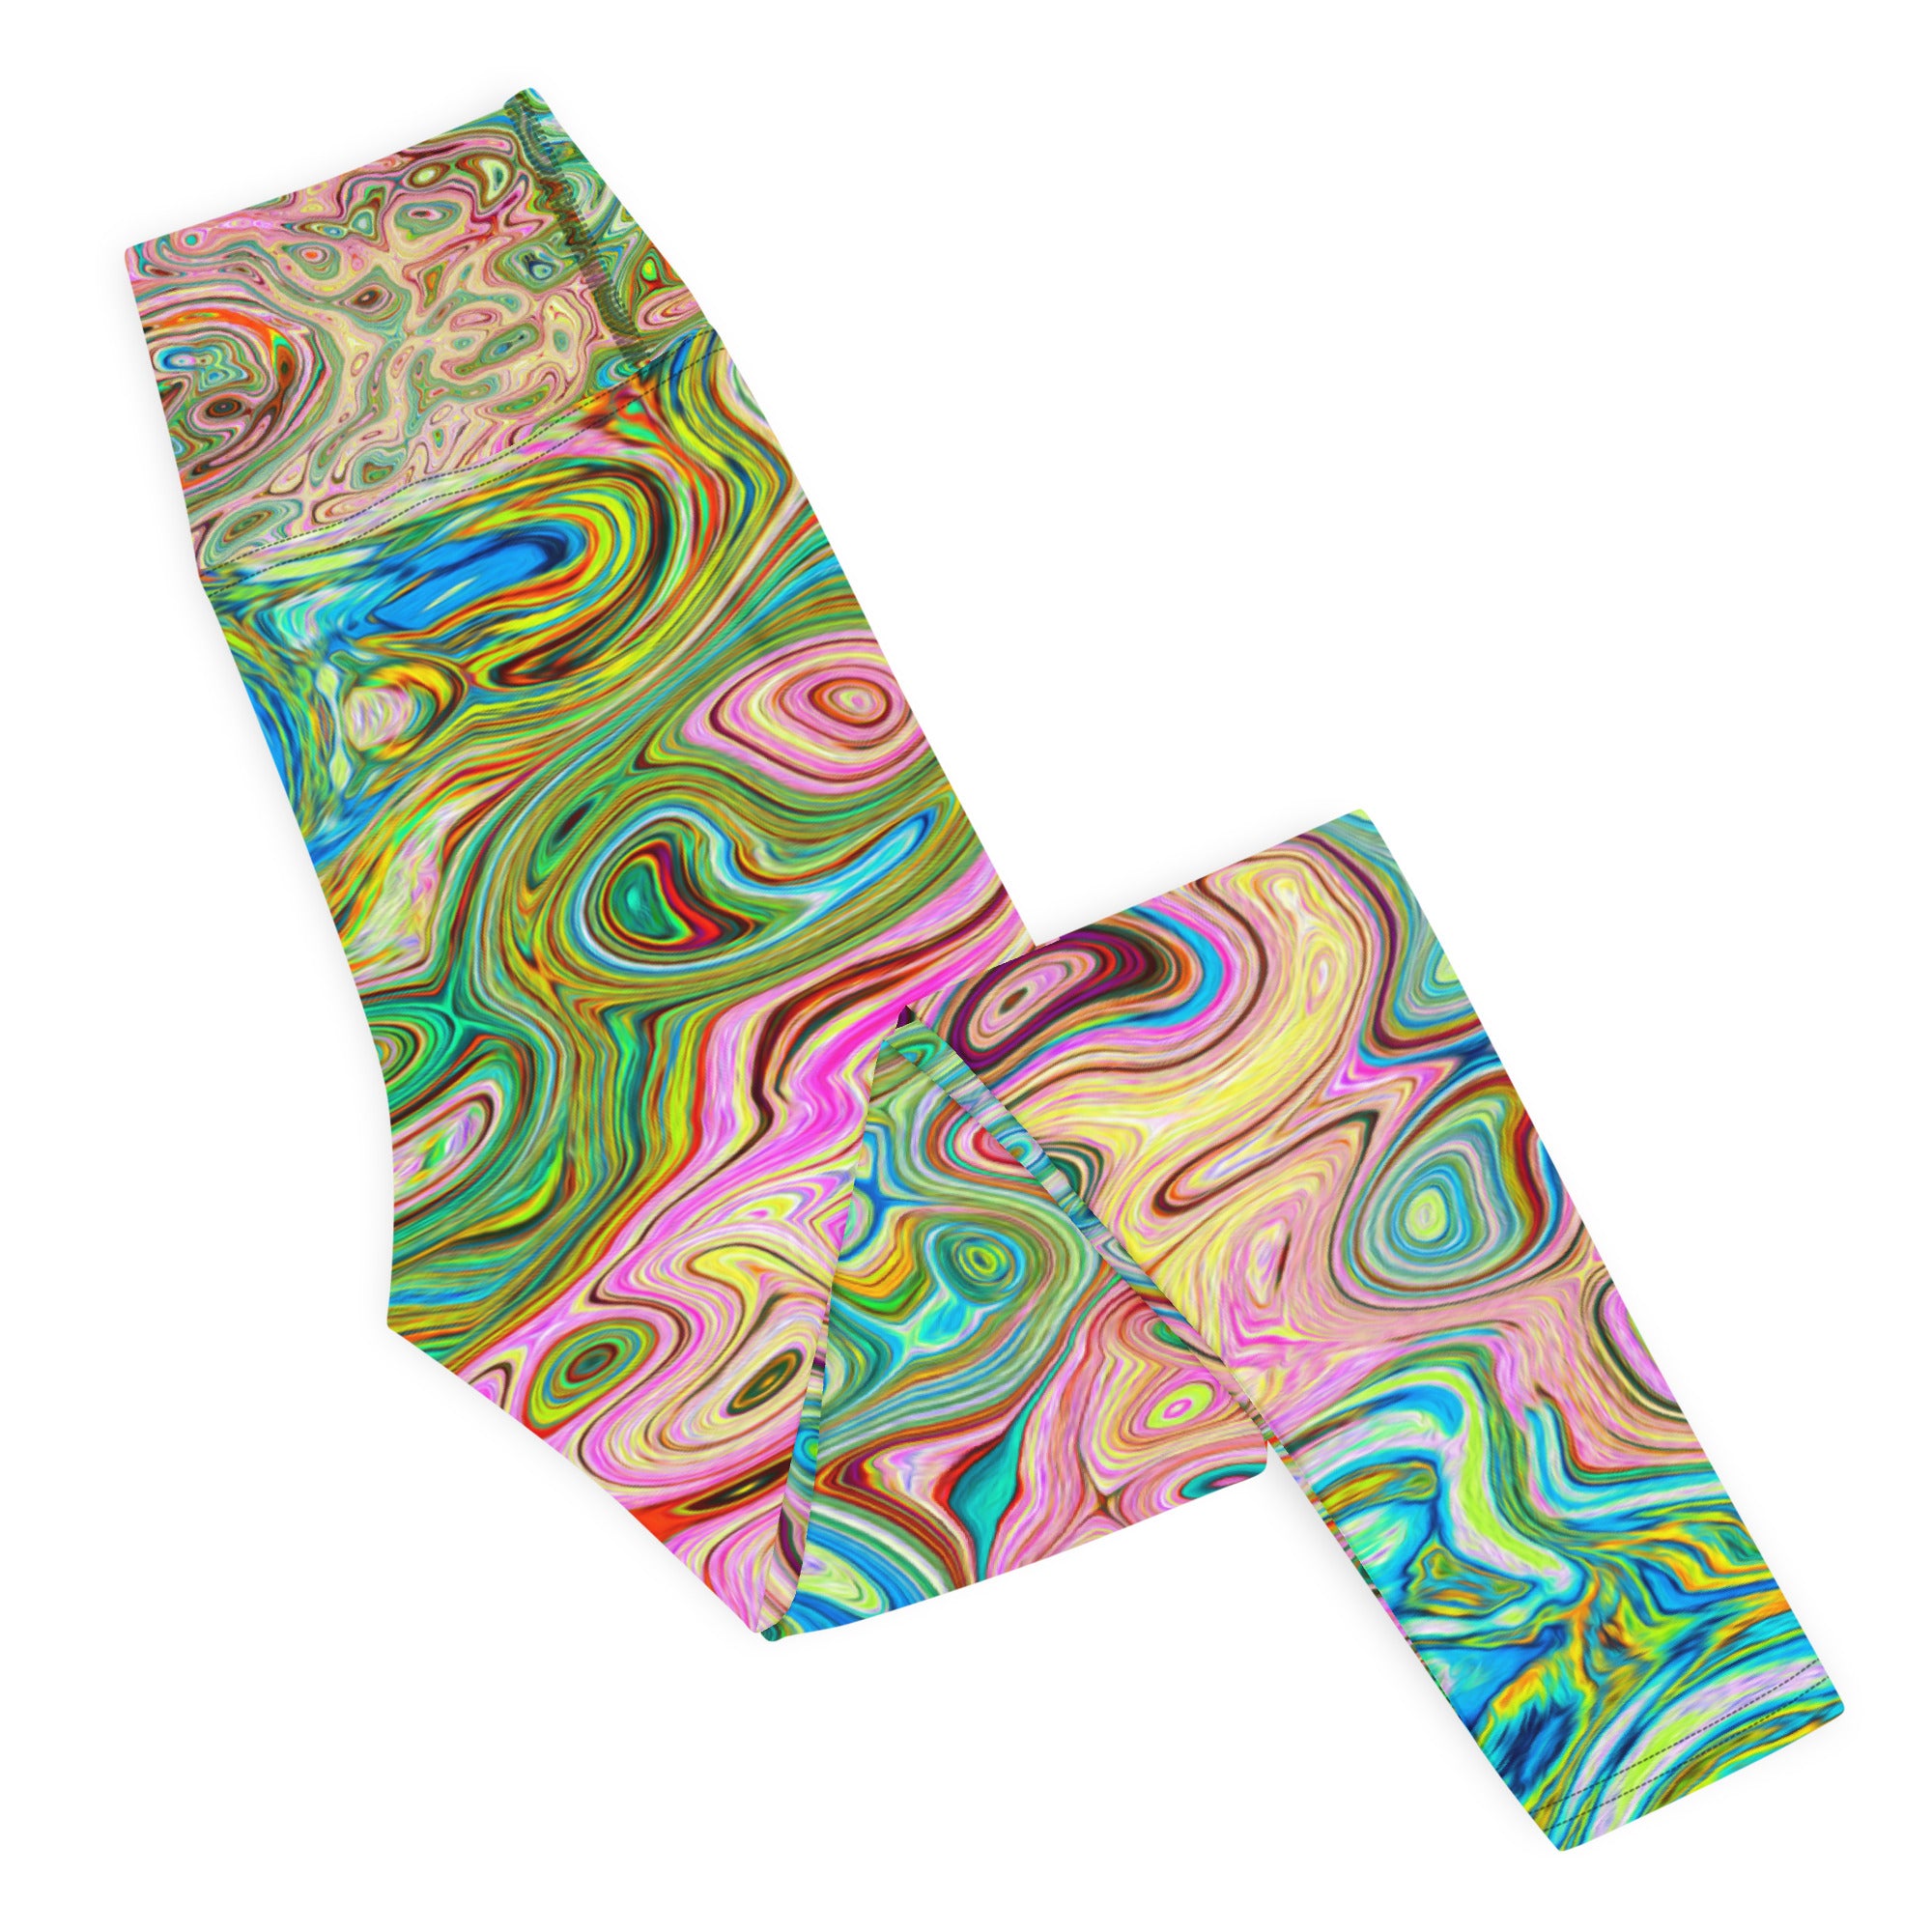 Yoga Leggings, Retro Groovy Abstract Colorful Rainbow Swirl